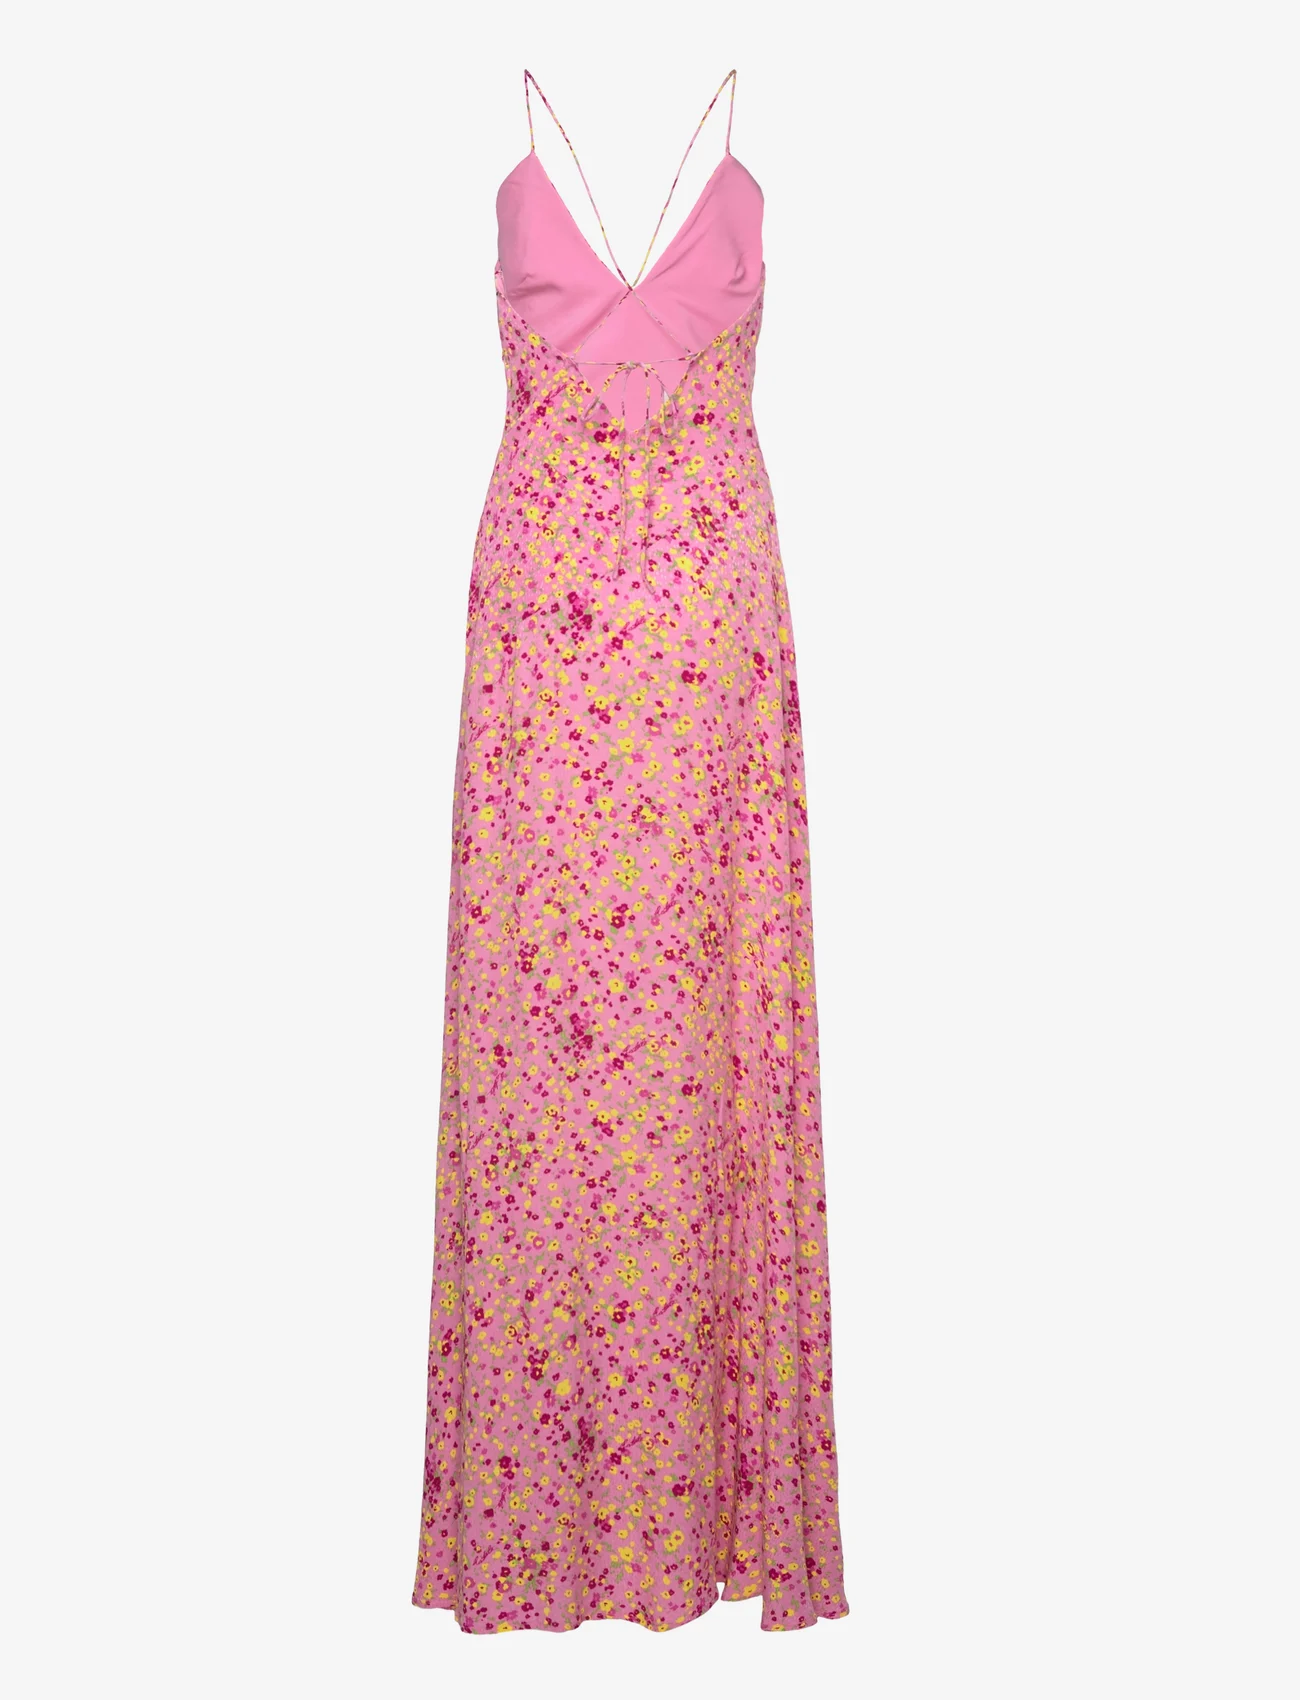 ROTATE Birger Christensen - Jacquard Maxi Slip Dress - slip dresses - fuchsia pink comb. - 1